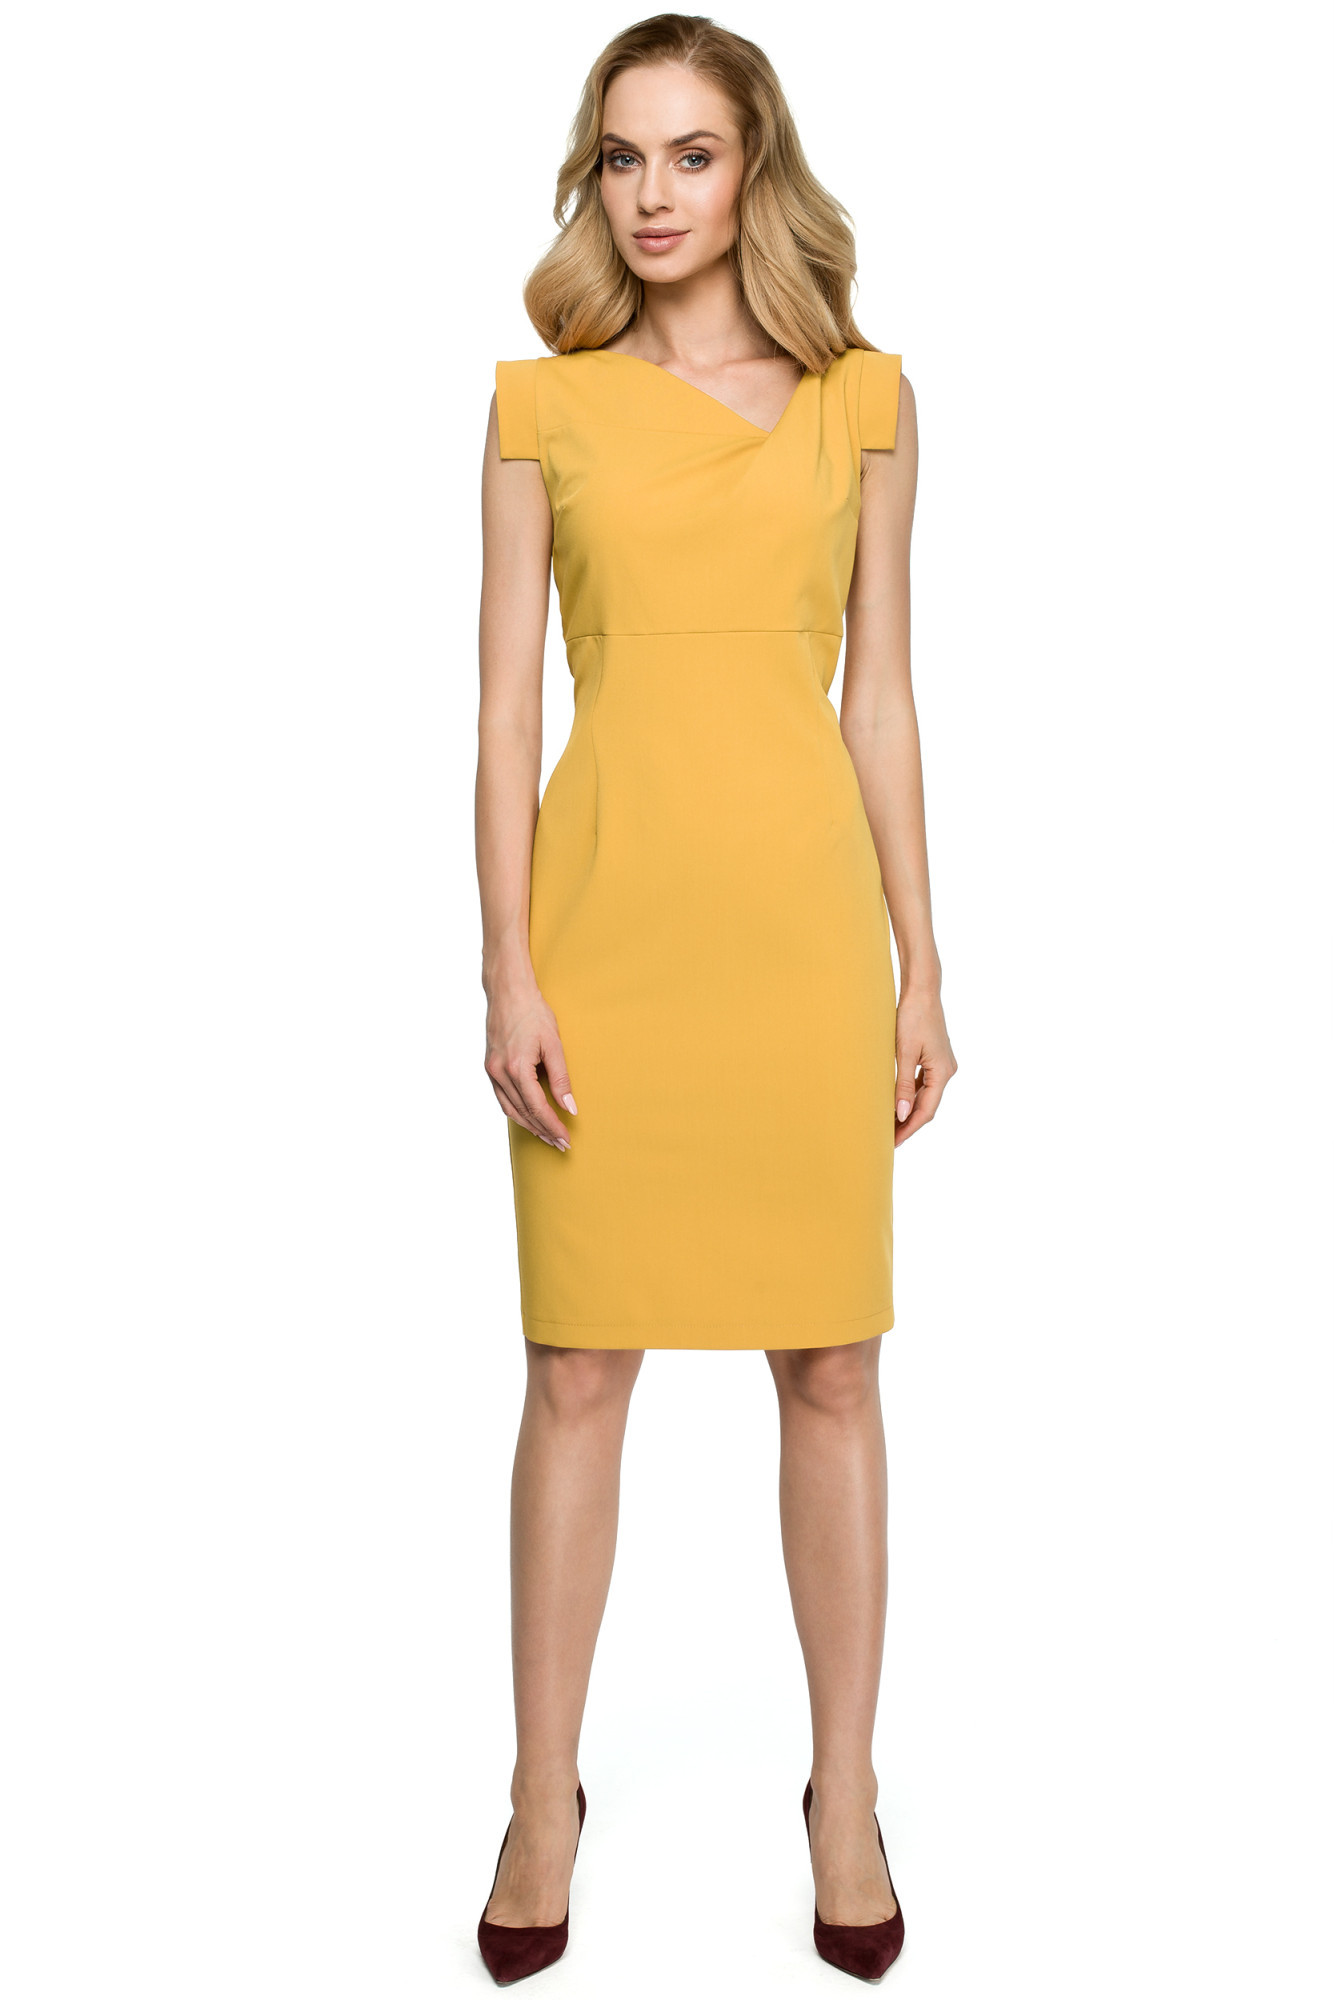 Stylove Dress S121 Yellow XL